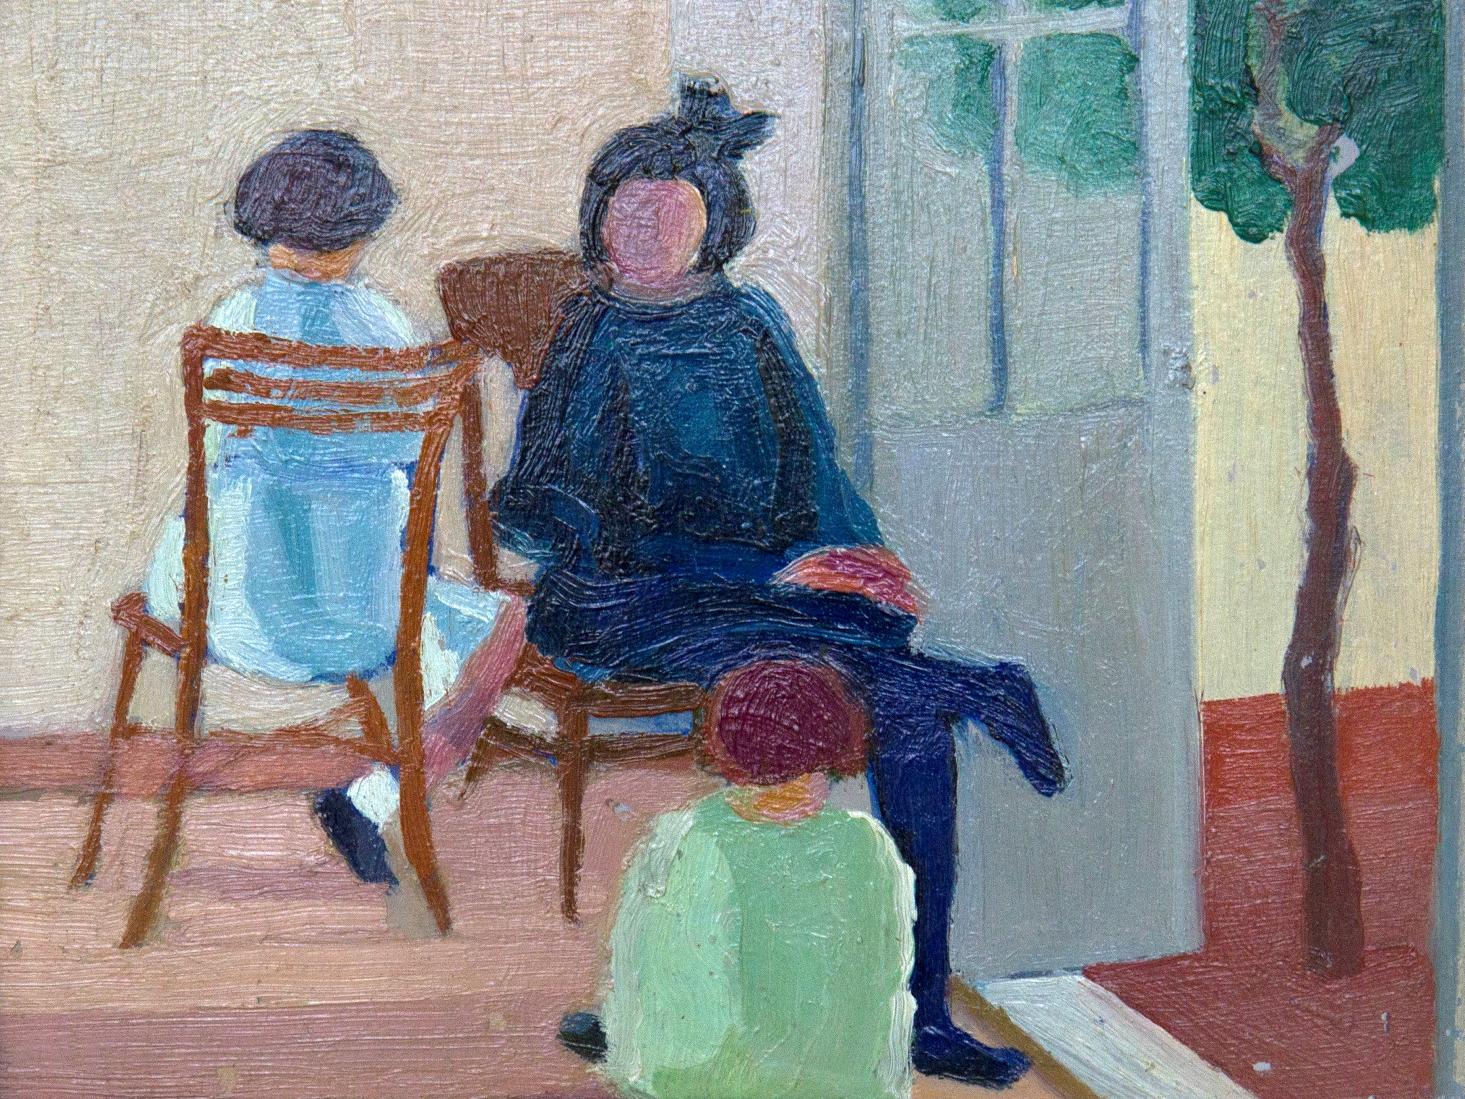 Pintura con tres figuras femeninas sentadas